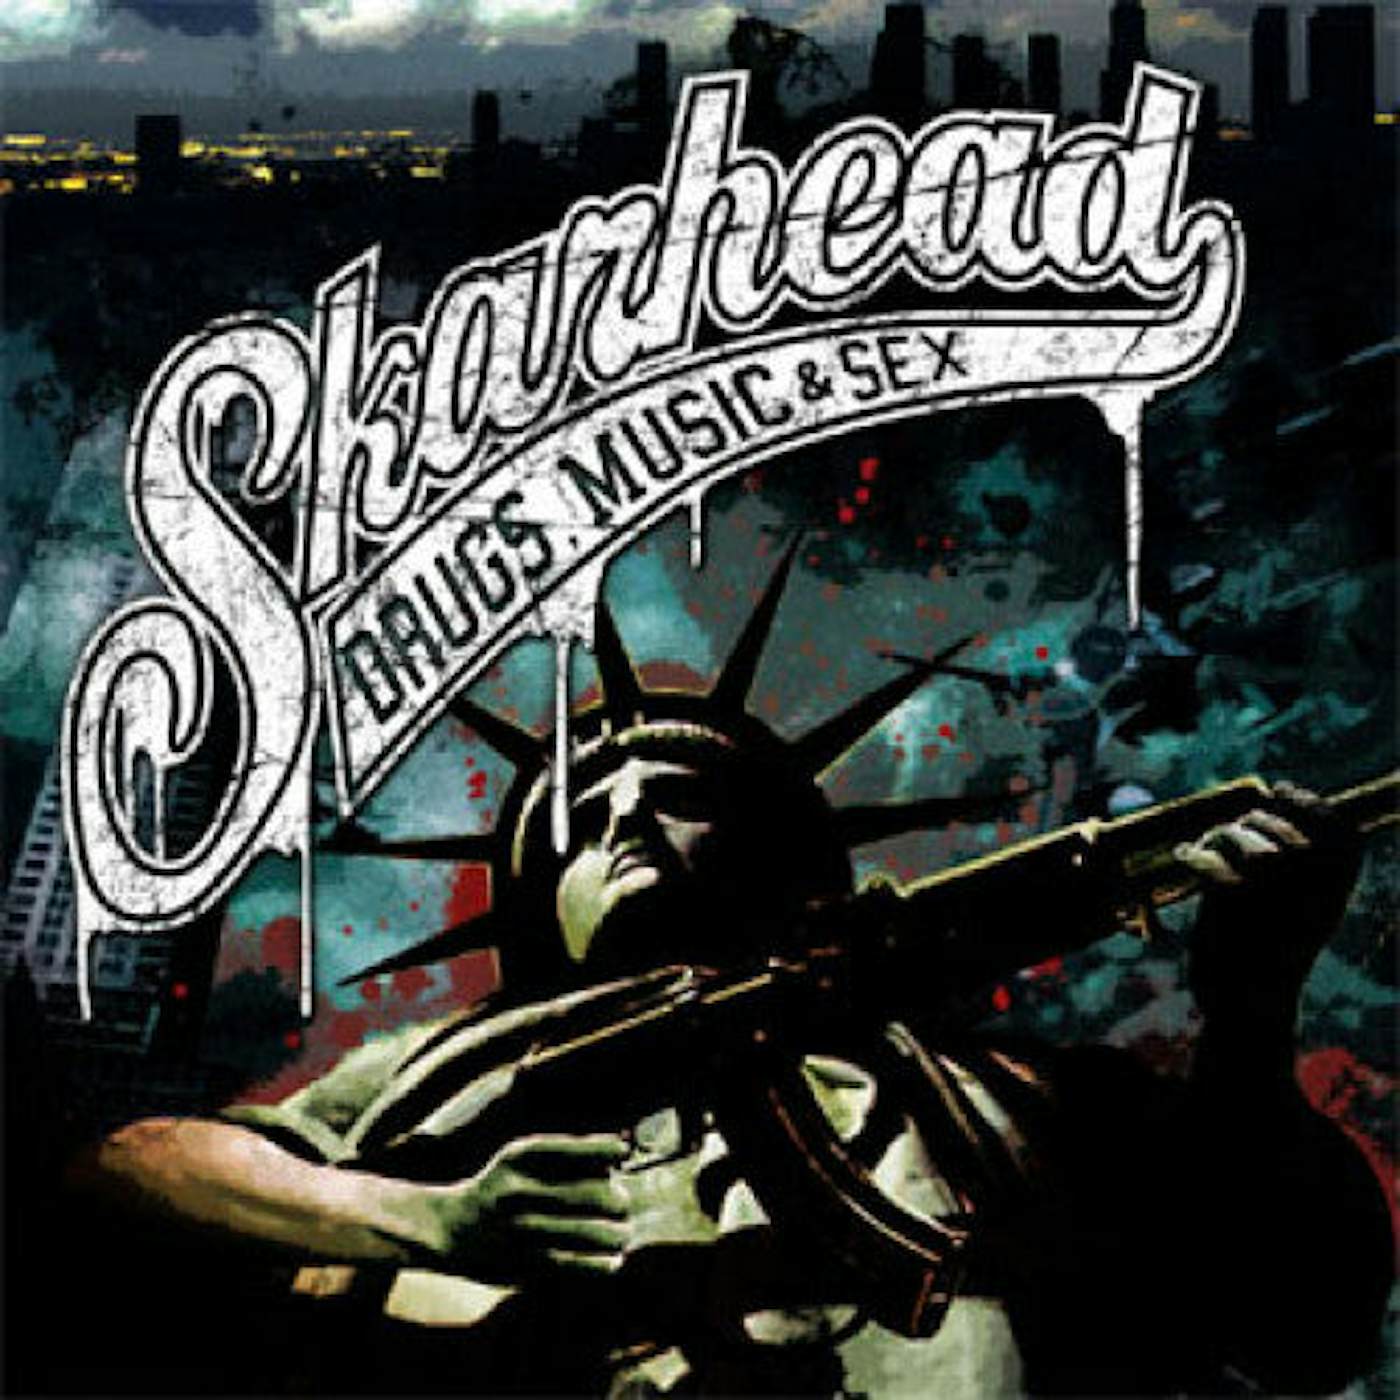 Skarhead Drugs, Music and Sex Vinyl Record